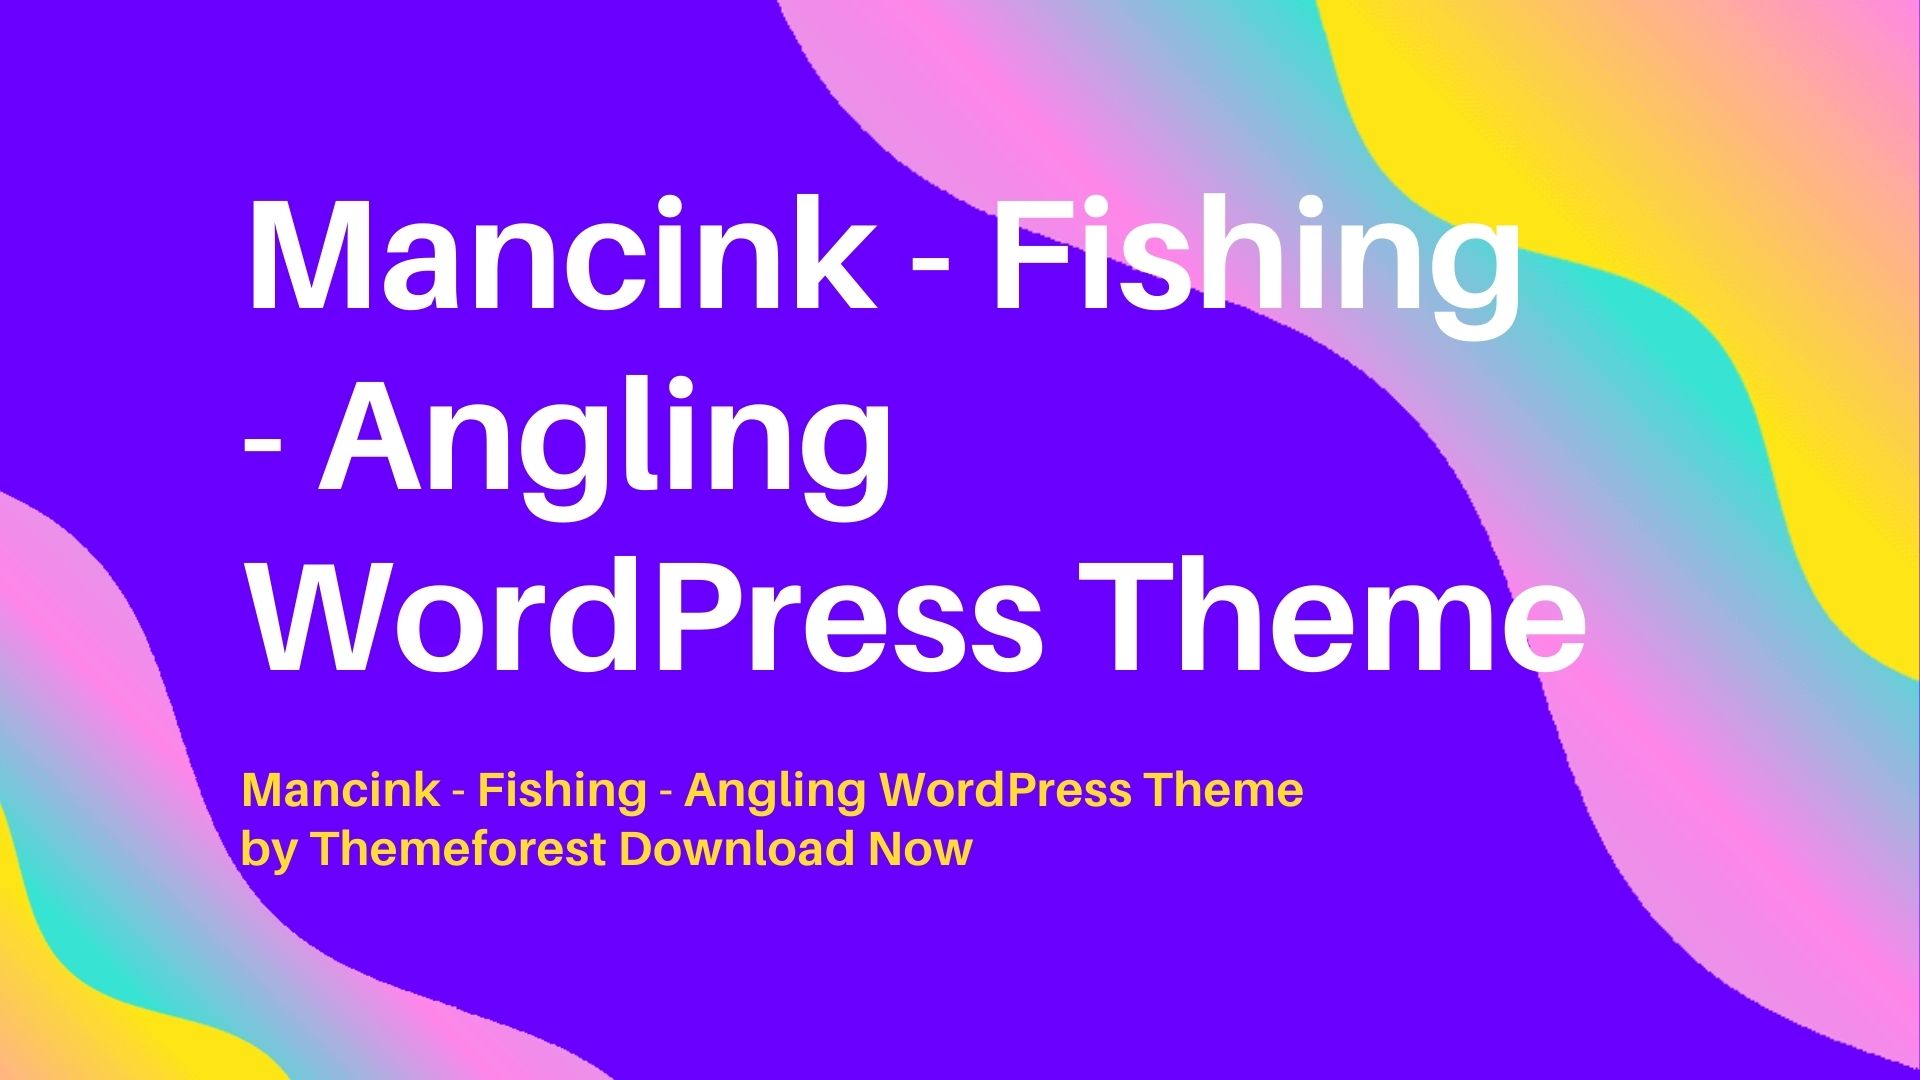 Mancink – Fishing – Angling WordPress Theme - Mancink - Fishing - Angling WordPress Theme v1.0.0 by Themeforest Download Now